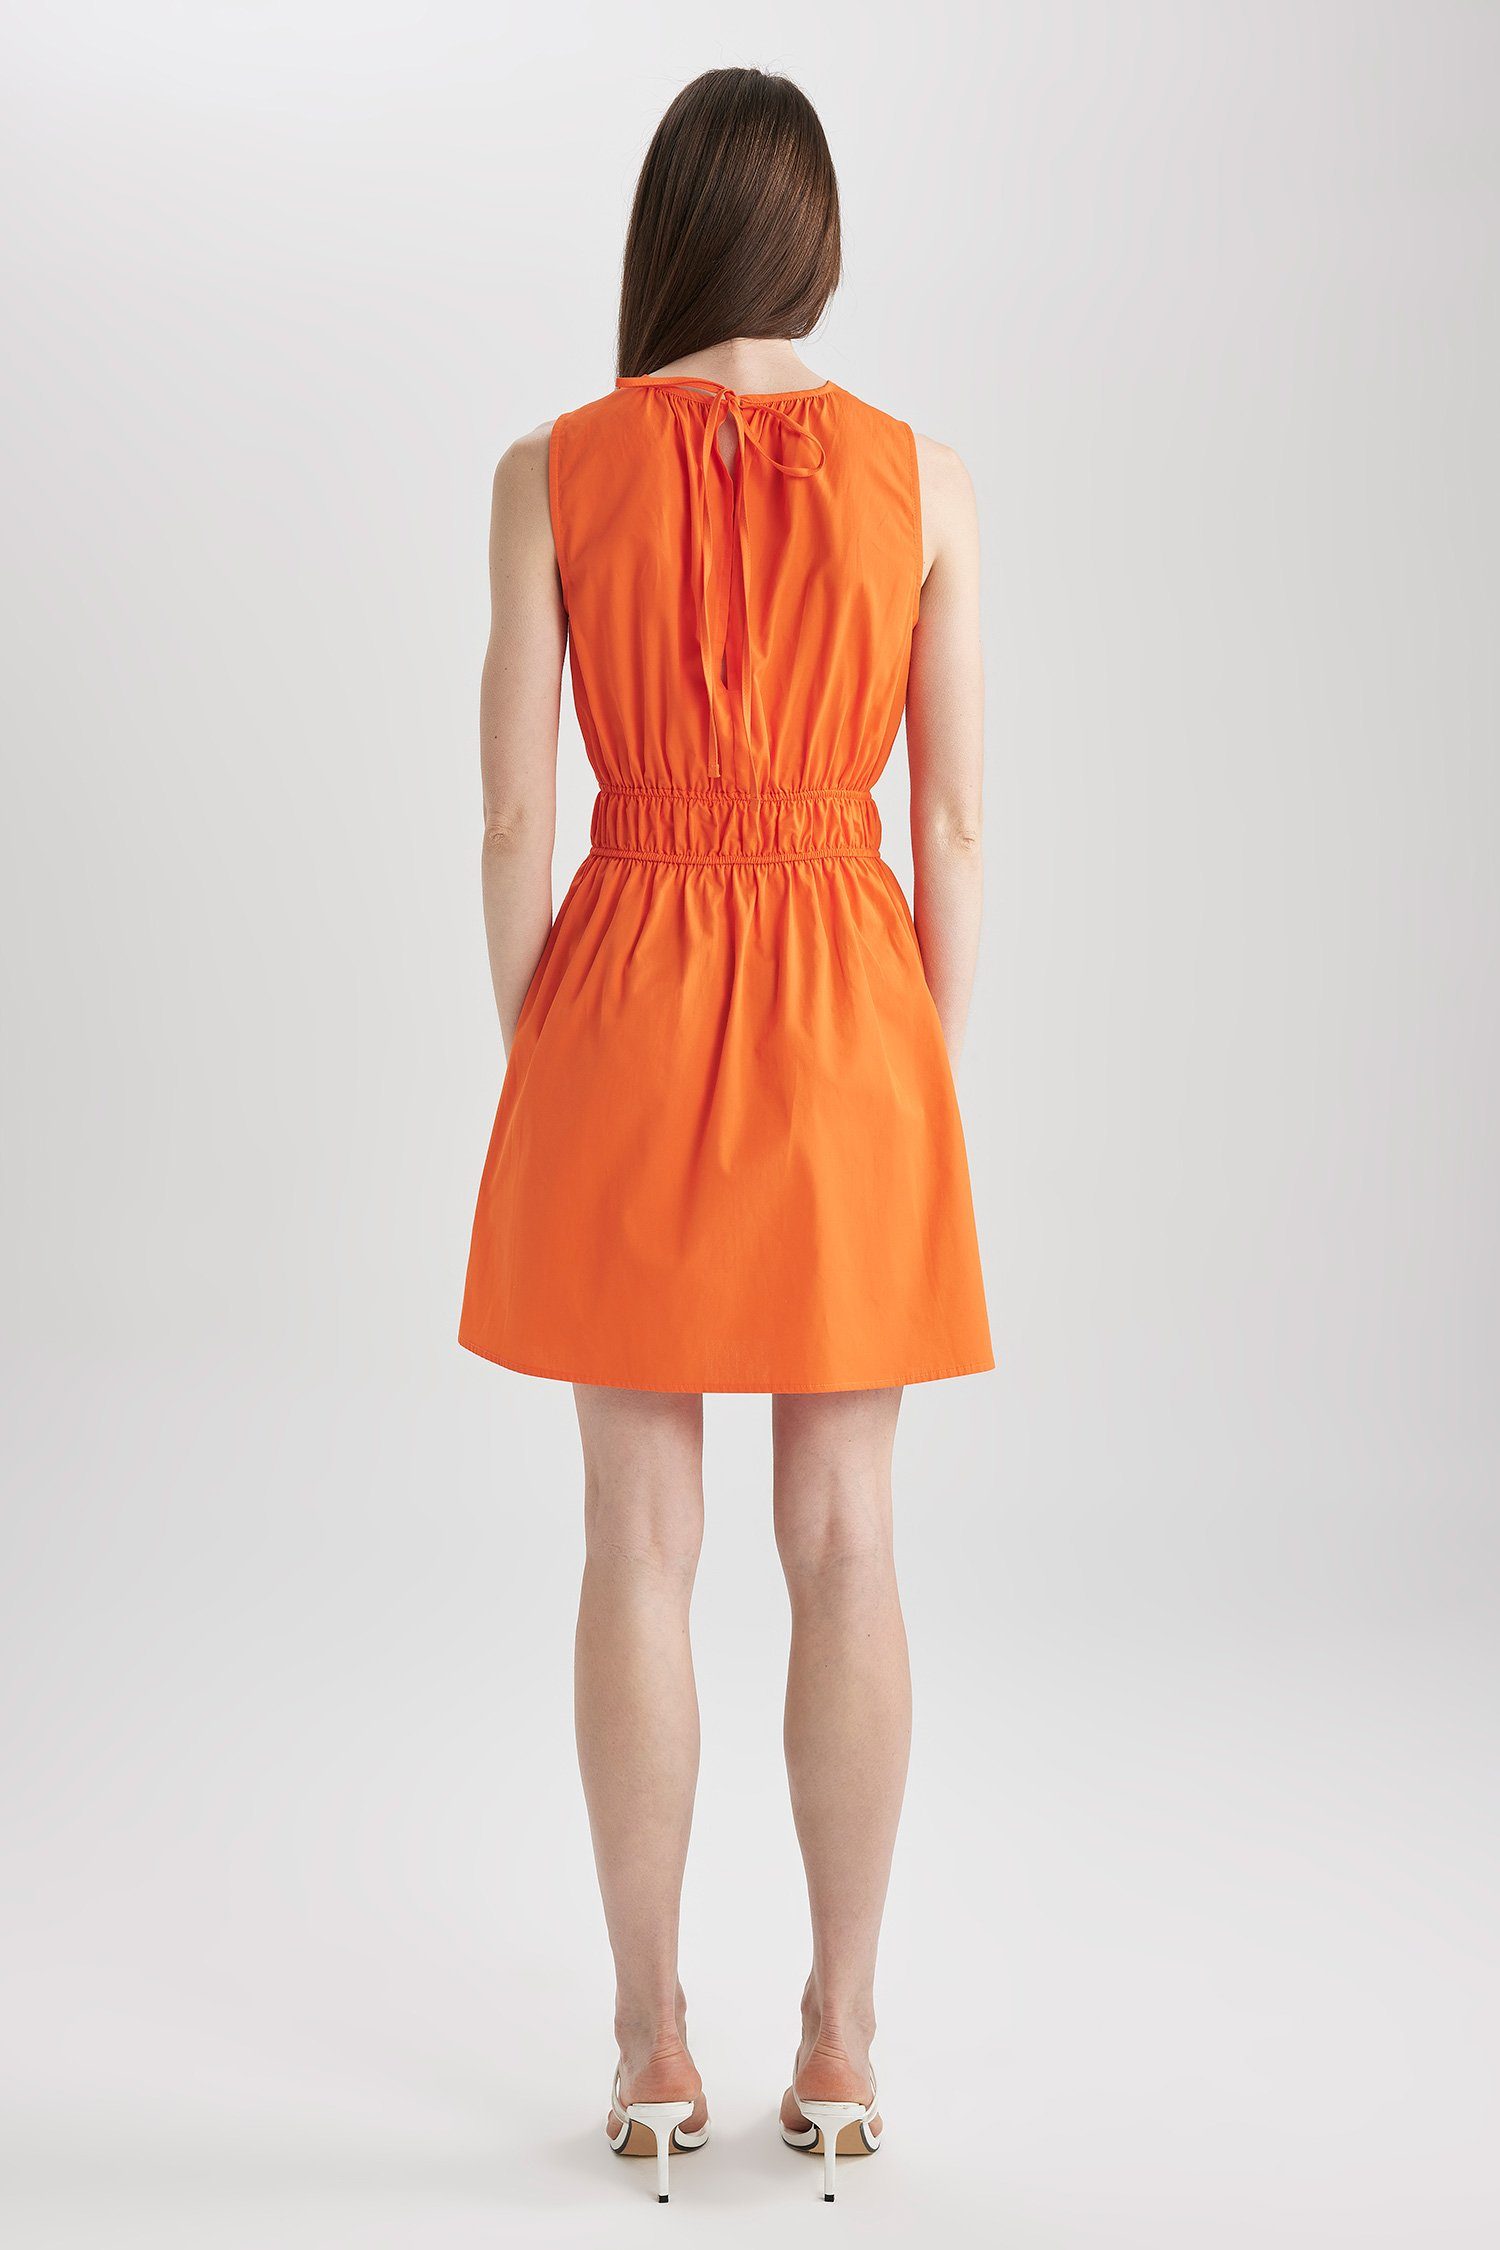 Orange DeFacto Sommerkleid Sommerkleid SHIRT Damen DRESS